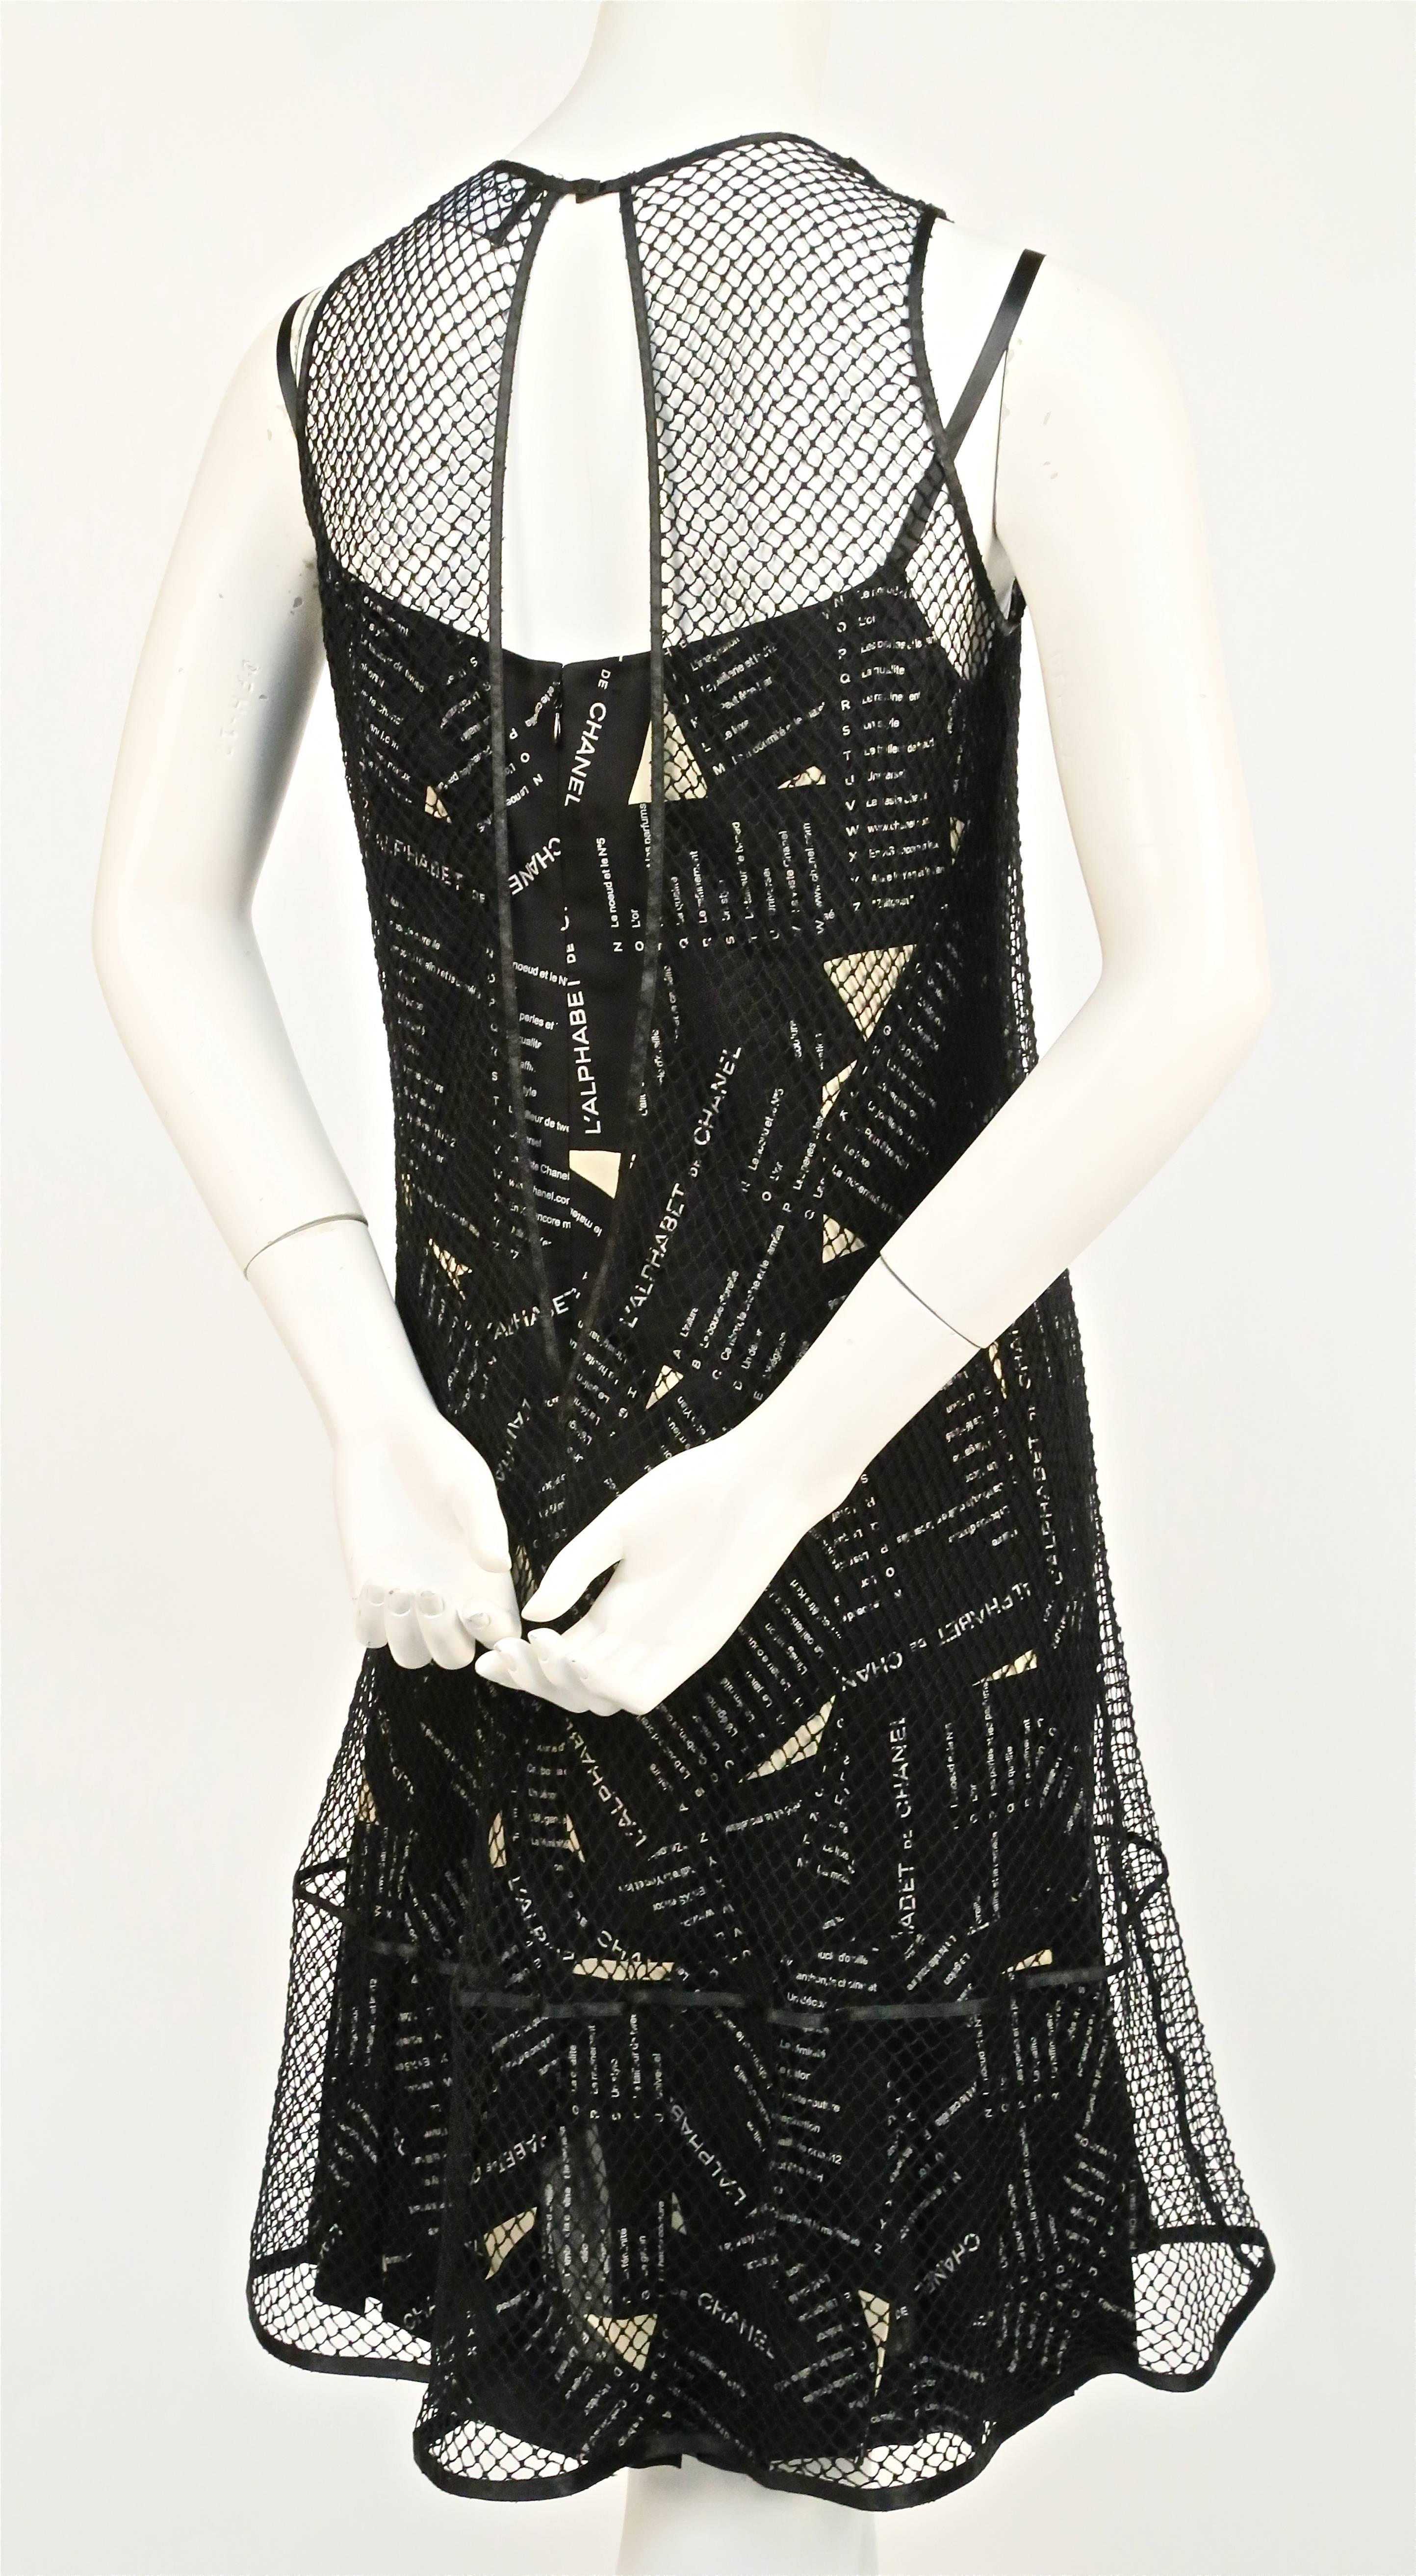 Black CHANEL silk printed dress with sheer net overlay - runway fall 2005 